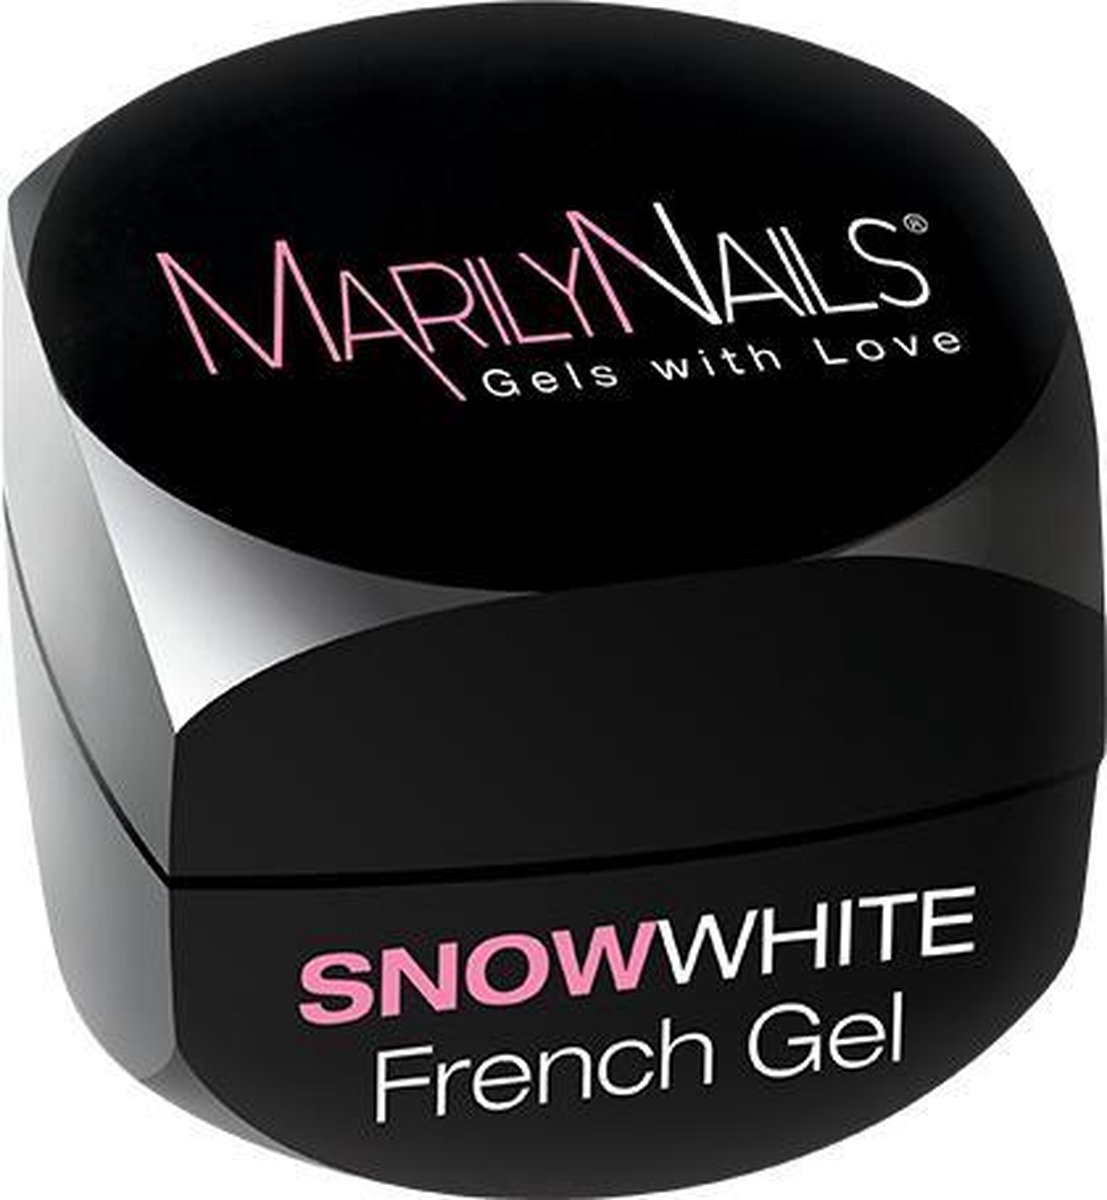 MaryliNails - Snowwhite - French Gel - 40ml